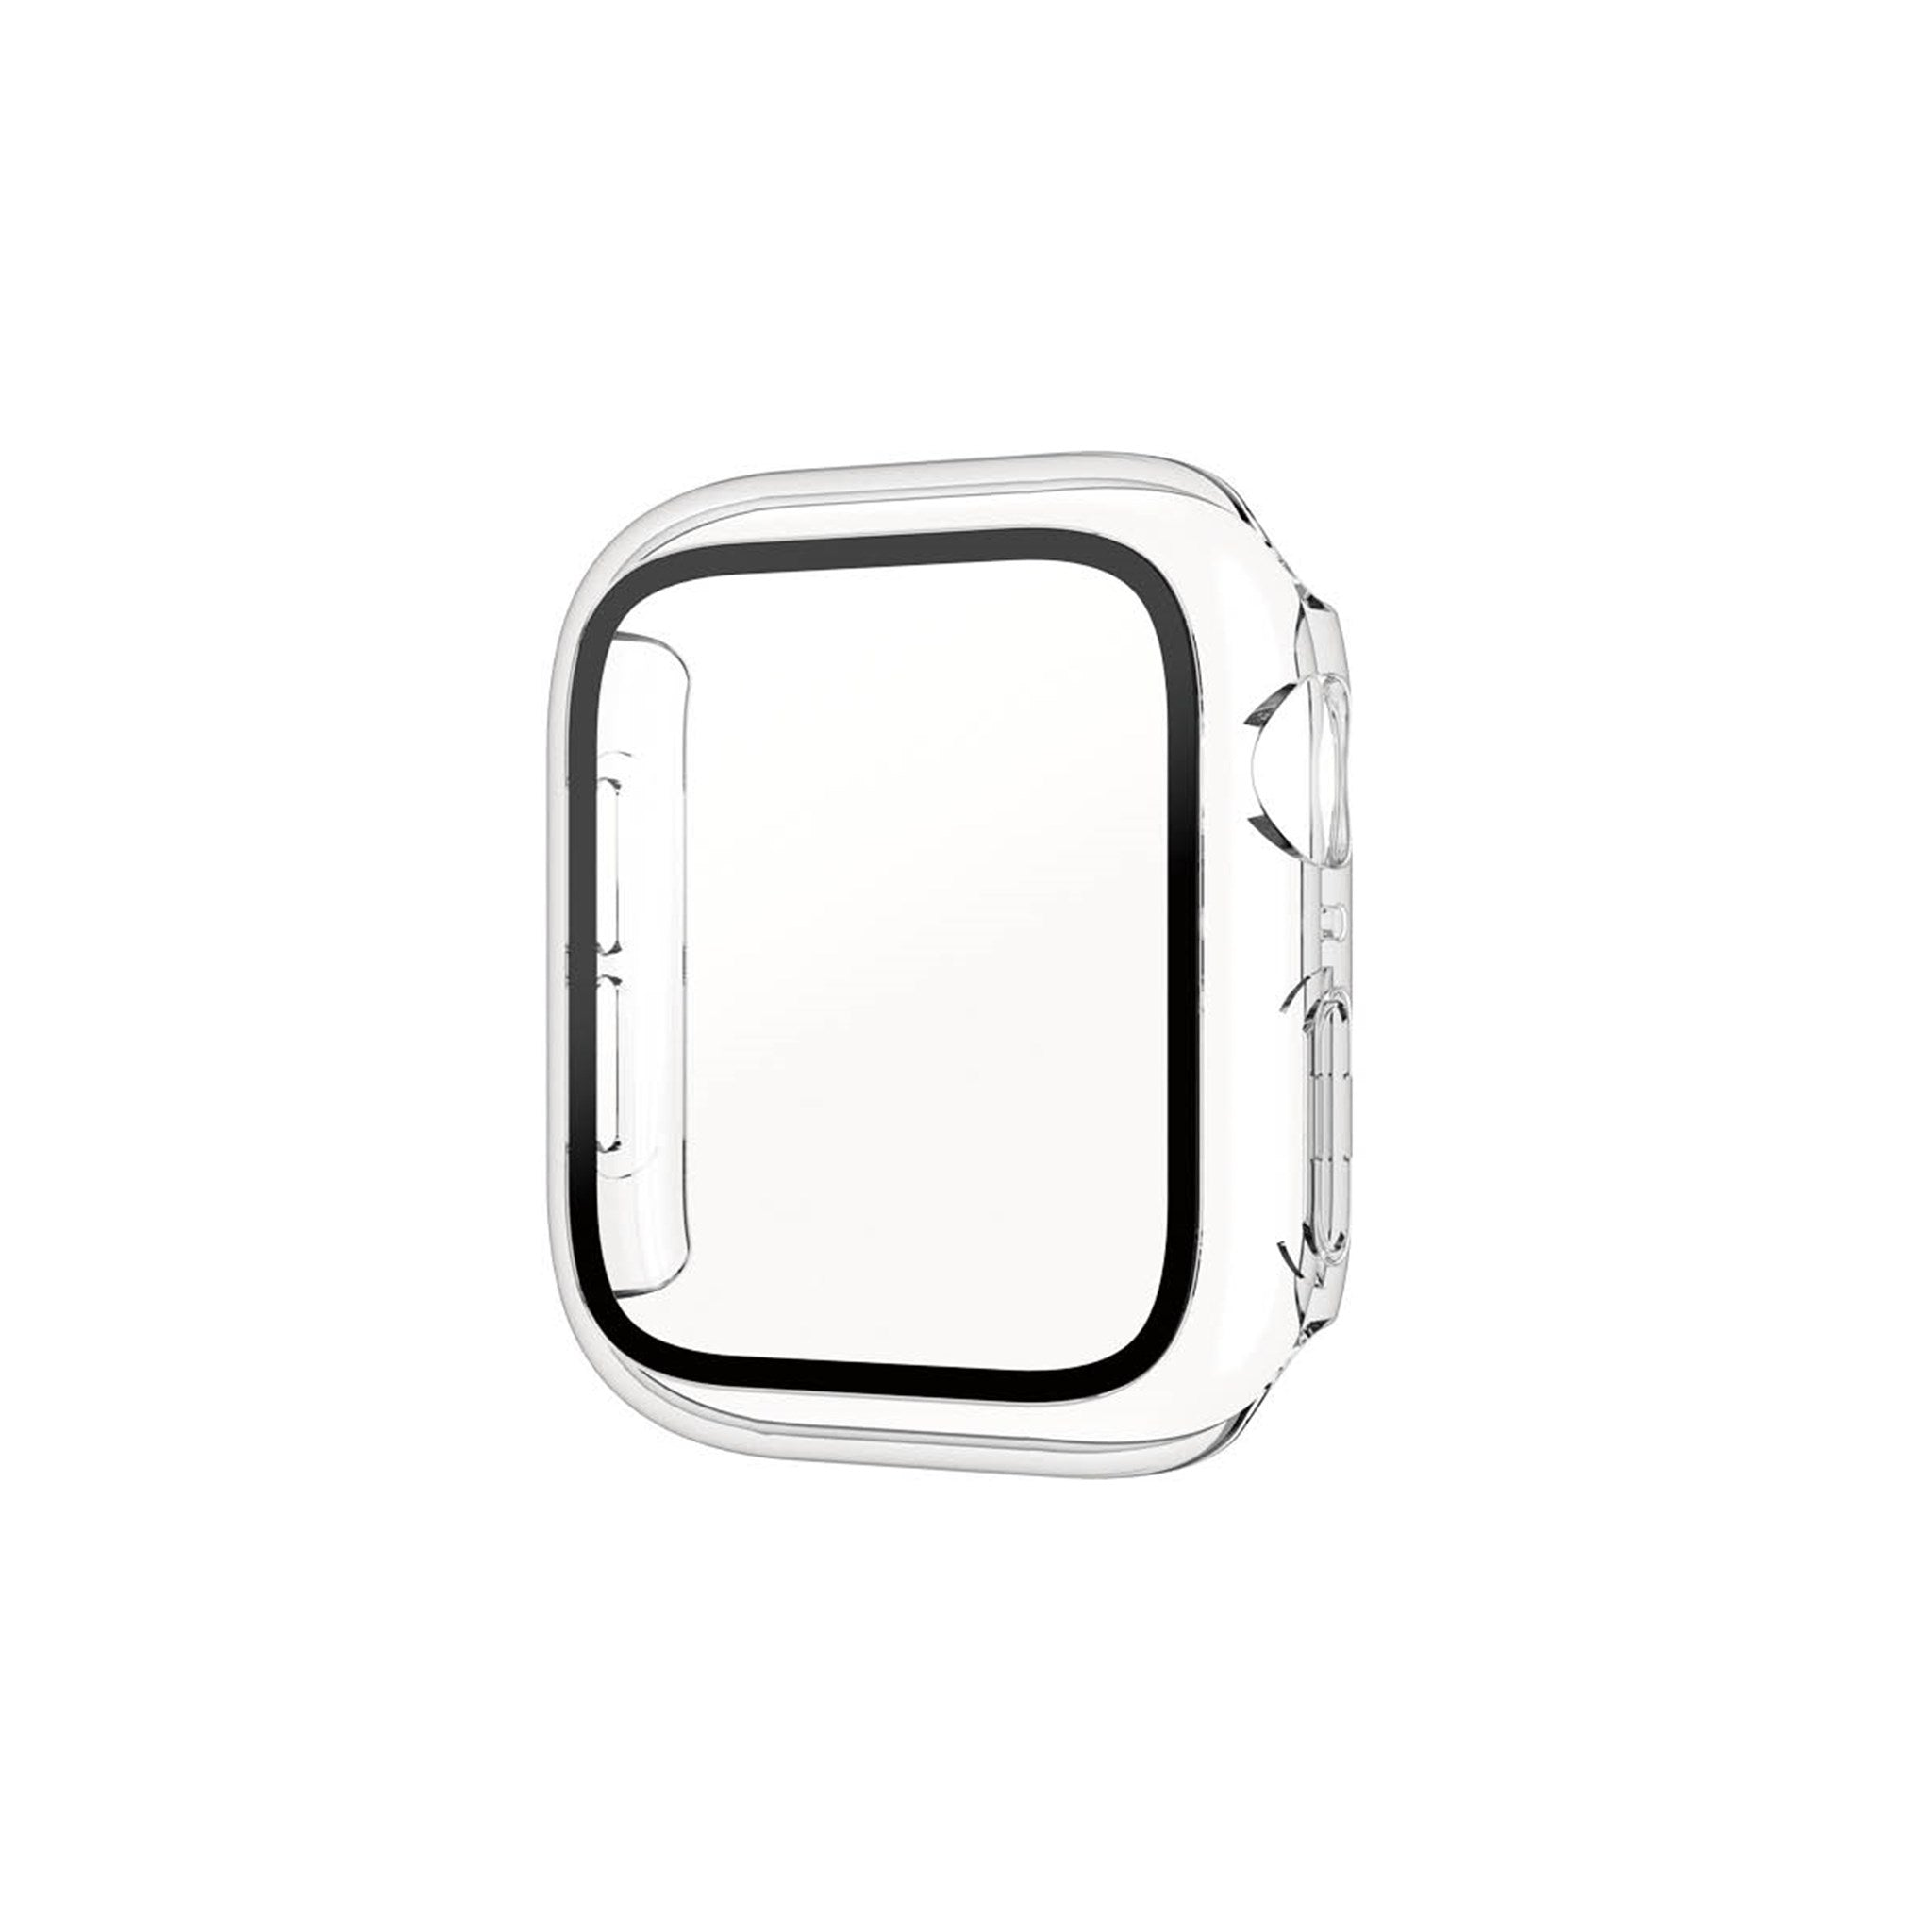 PANZER GLASS Full SE Body 6 | 5 Series 4 | 40mm| Apple Watch Watch 40mm Series 40mm 40mm) Watch Watch Displayschutz(für Series